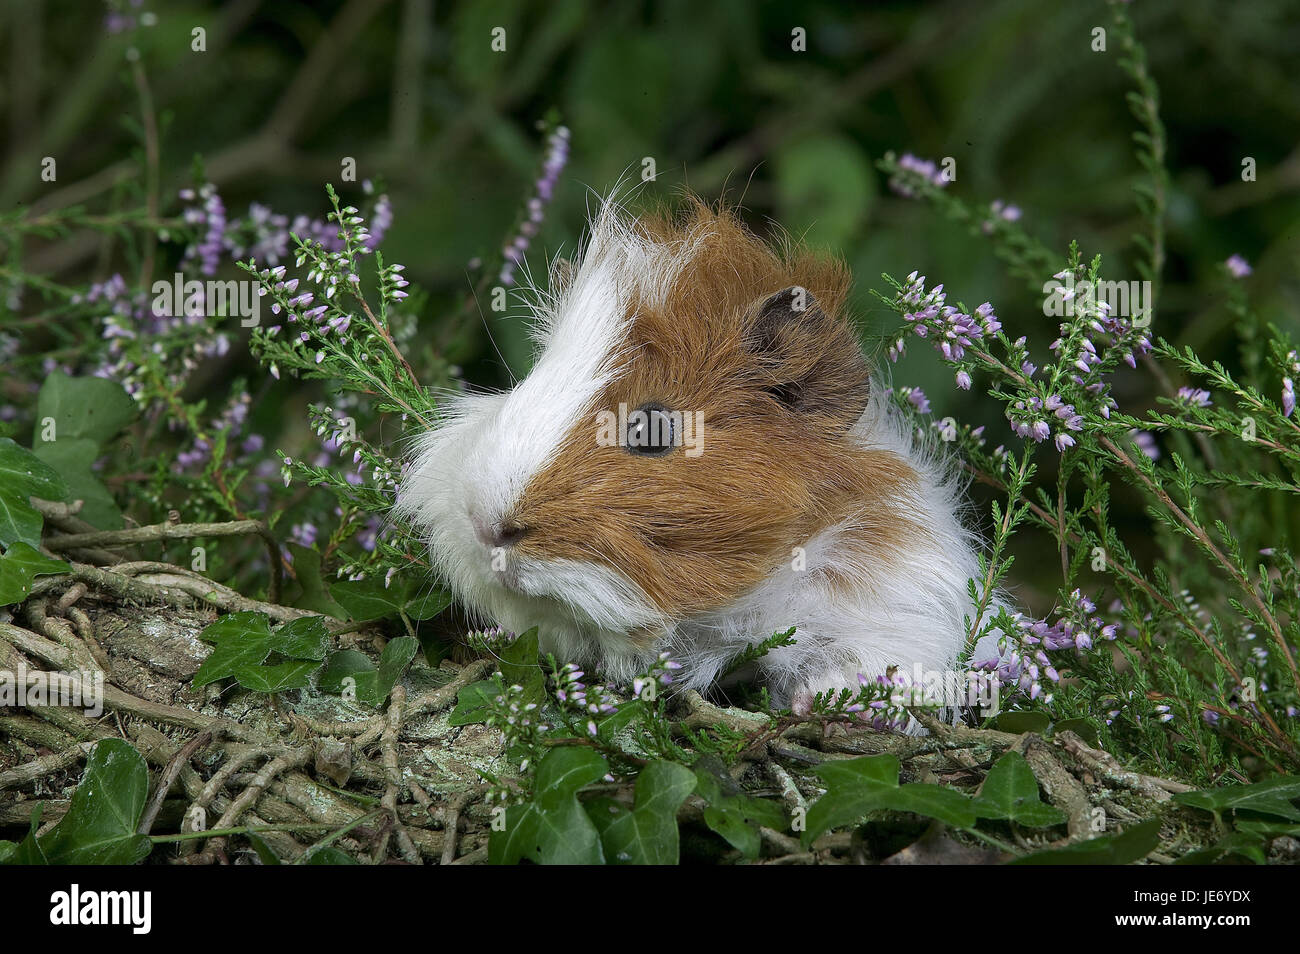 House guinea pigs, Cavia porcellus, adult animal, heather, Stock Photo